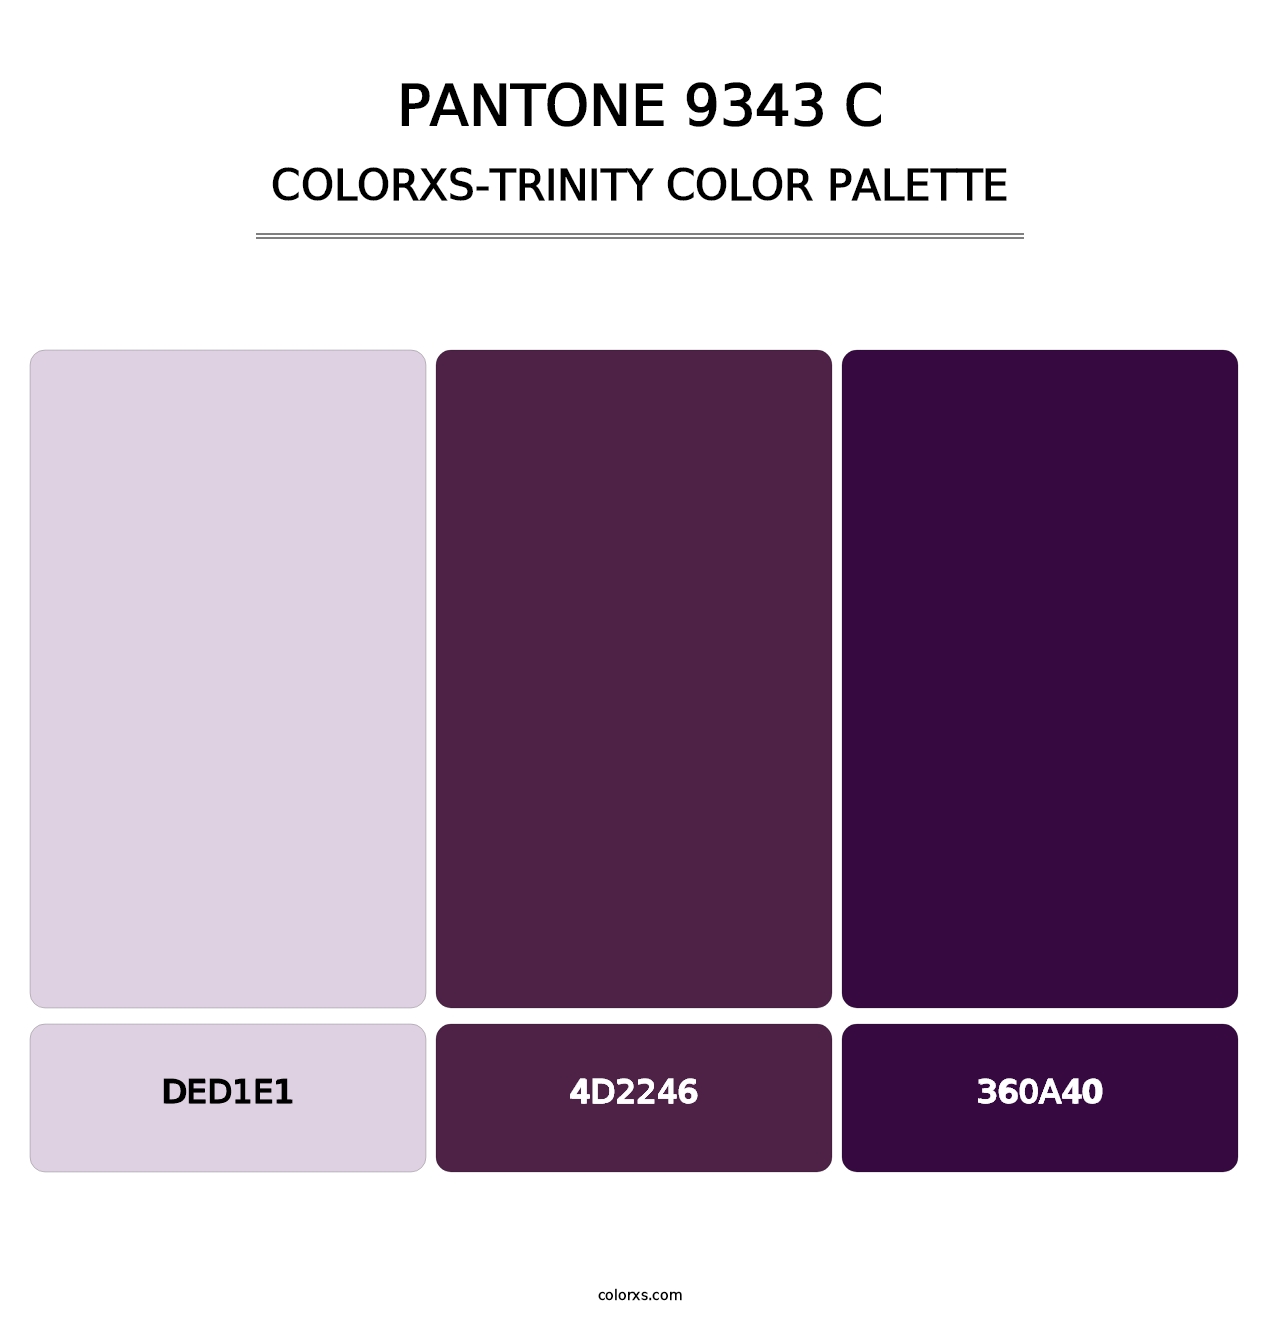 PANTONE 9343 C - Colorxs Trinity Palette